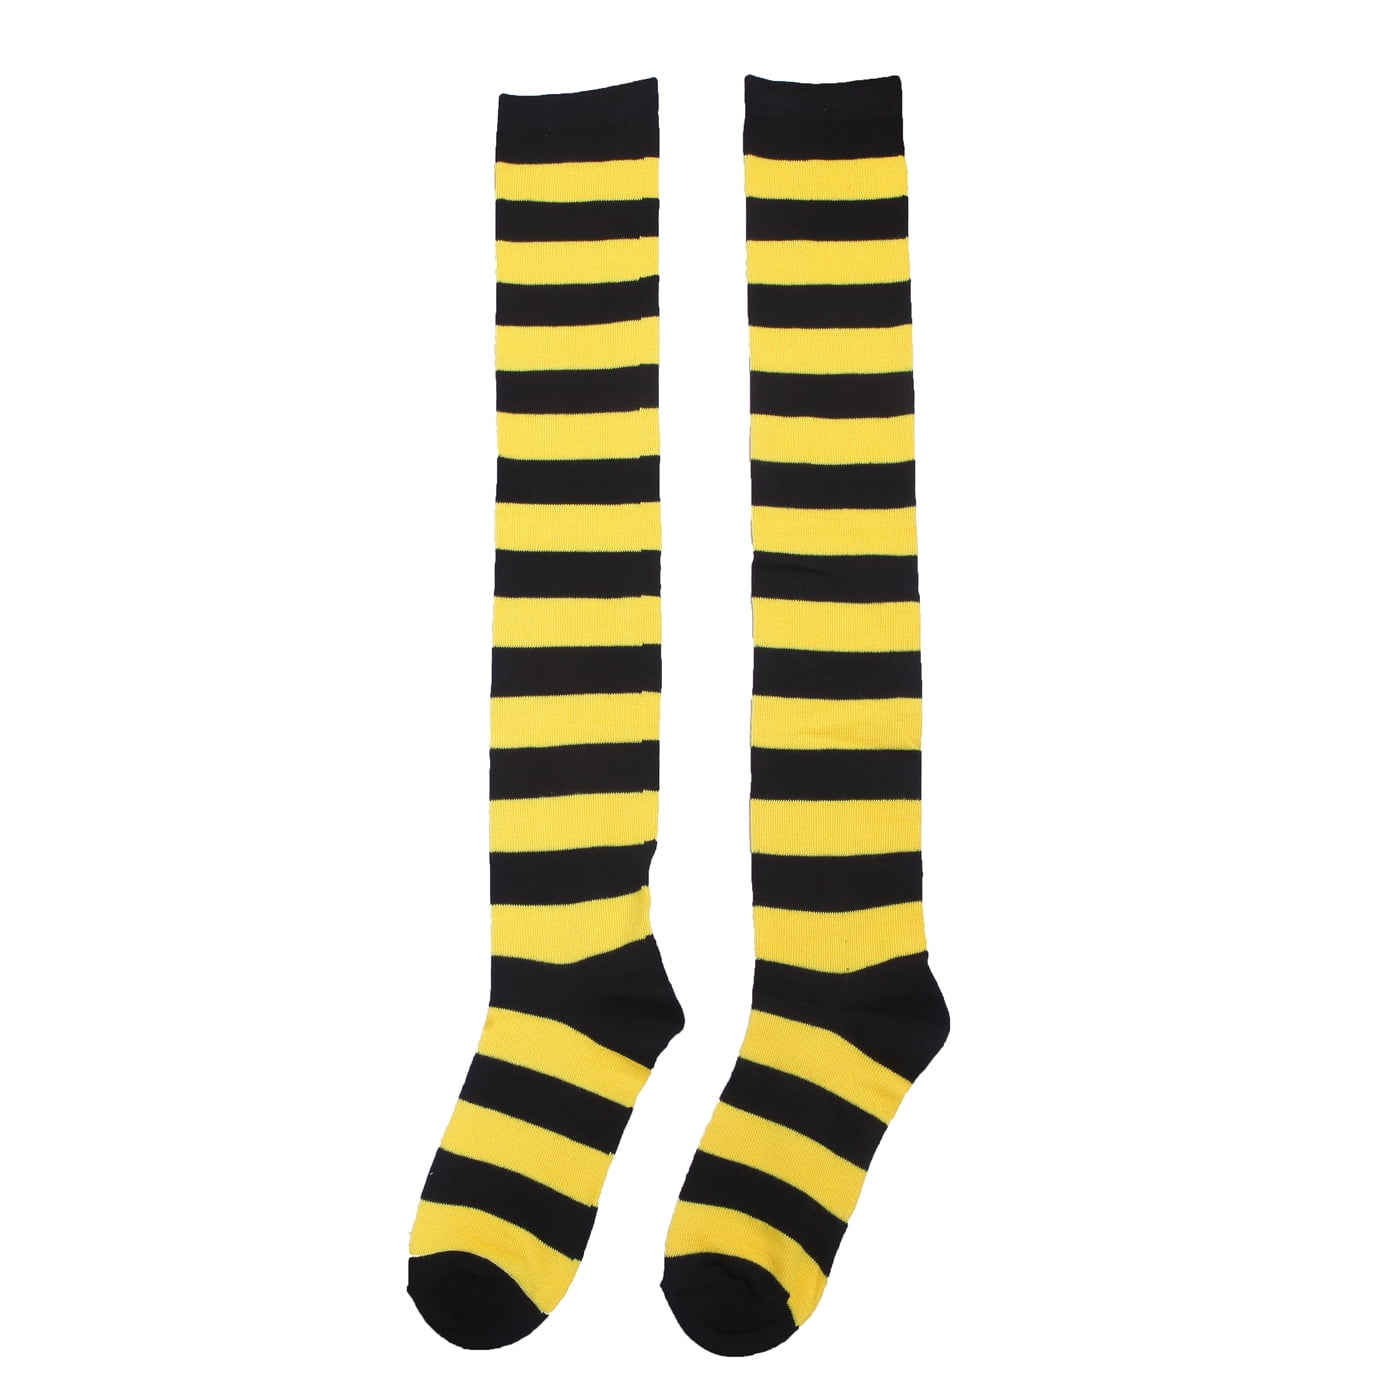 Mysocks Knee High Long Socks Stripe Yellow and Black